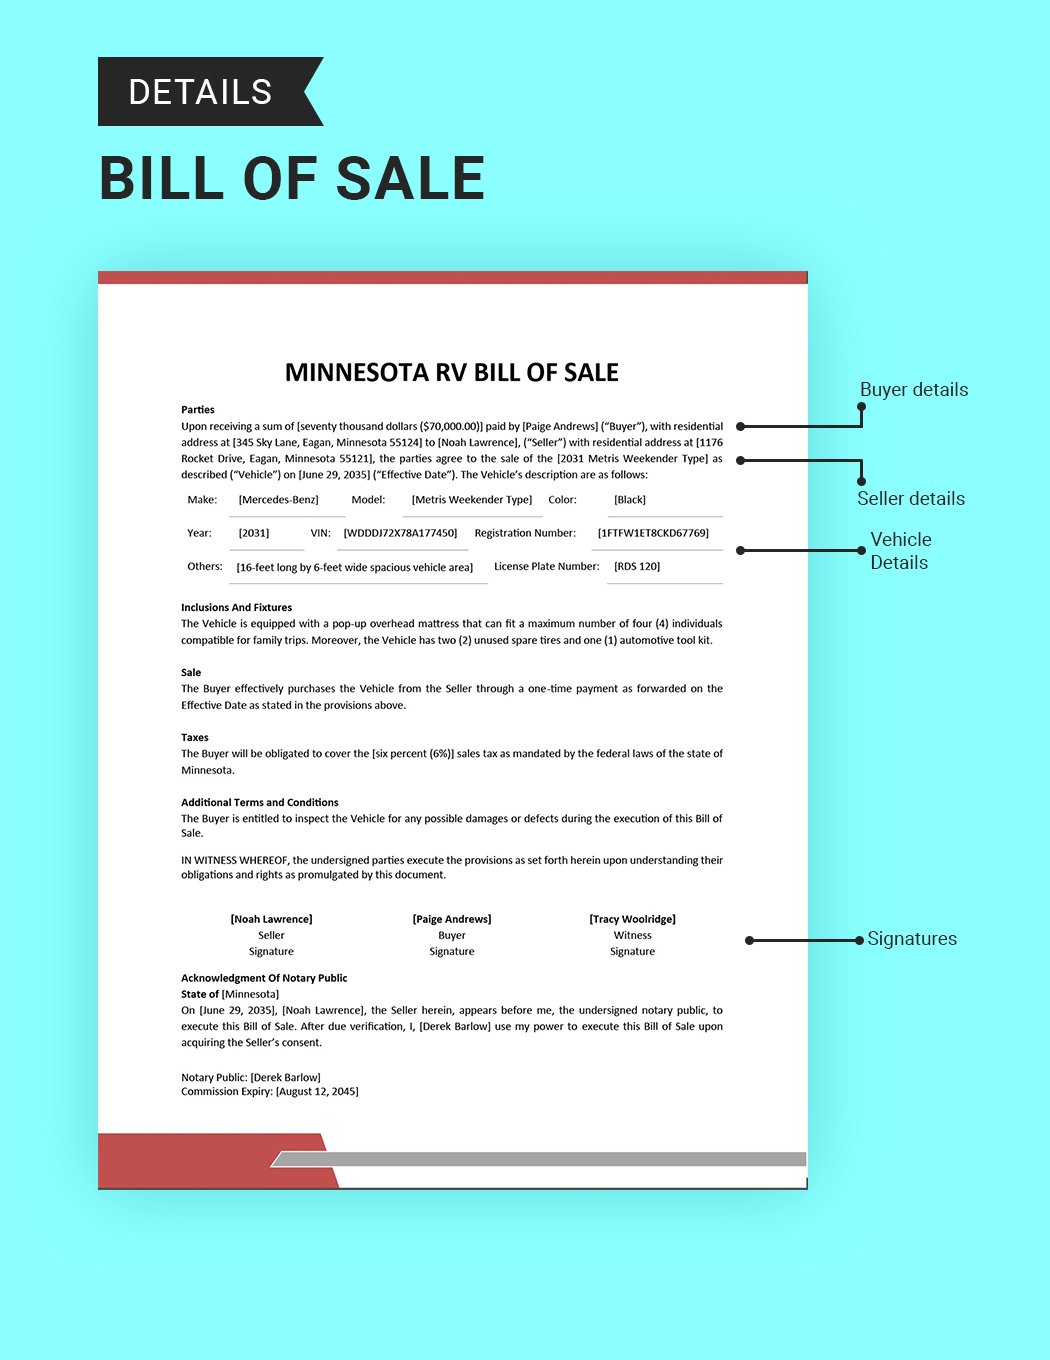 Minnesota RV Bill of Sale Template